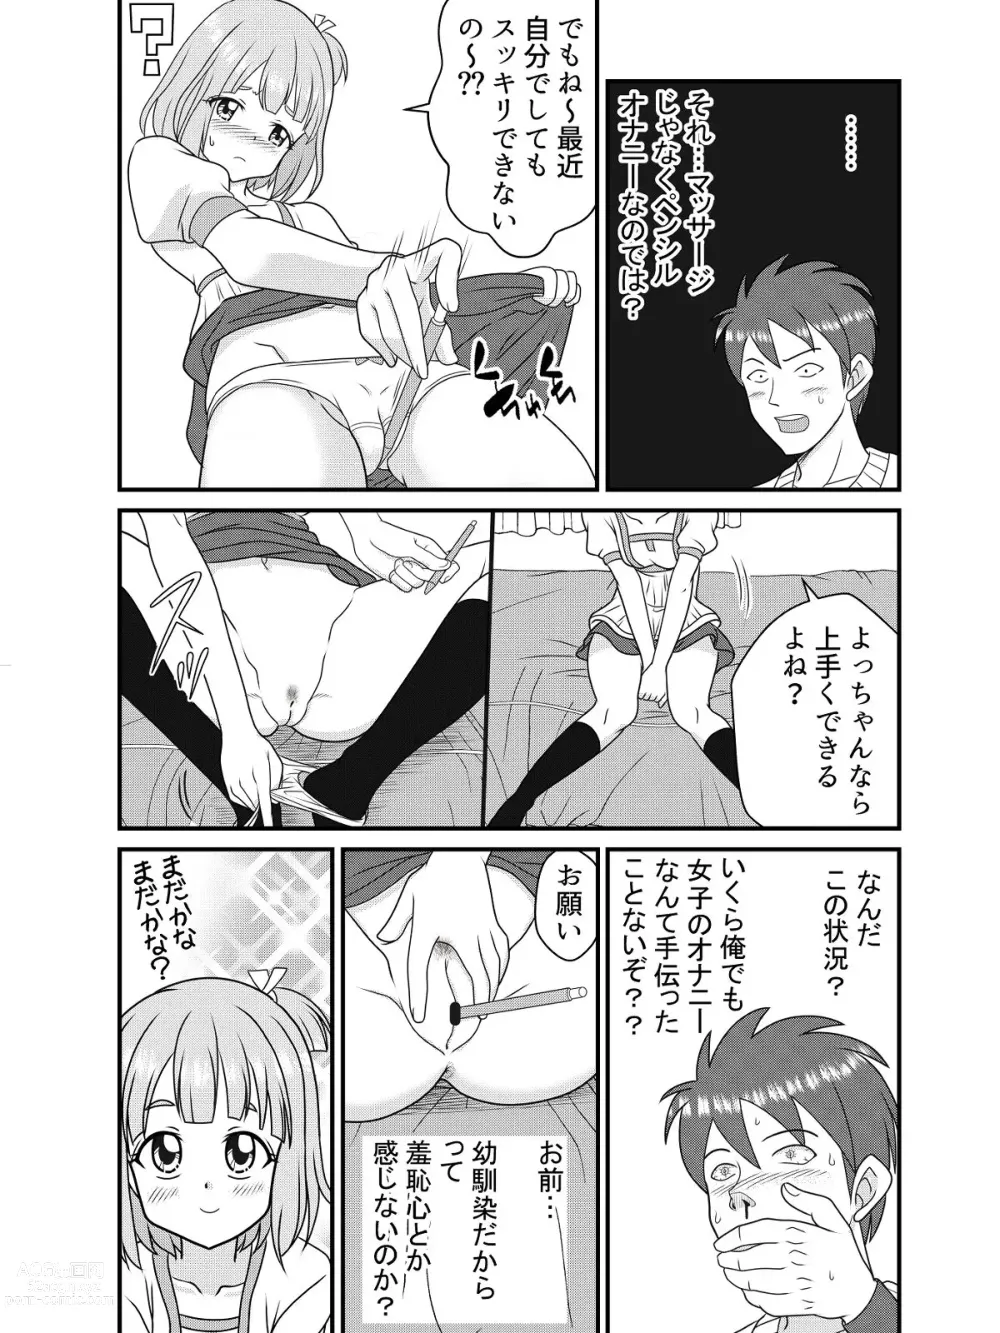 Page 6 of doujinshi Pen Saki no Koibito